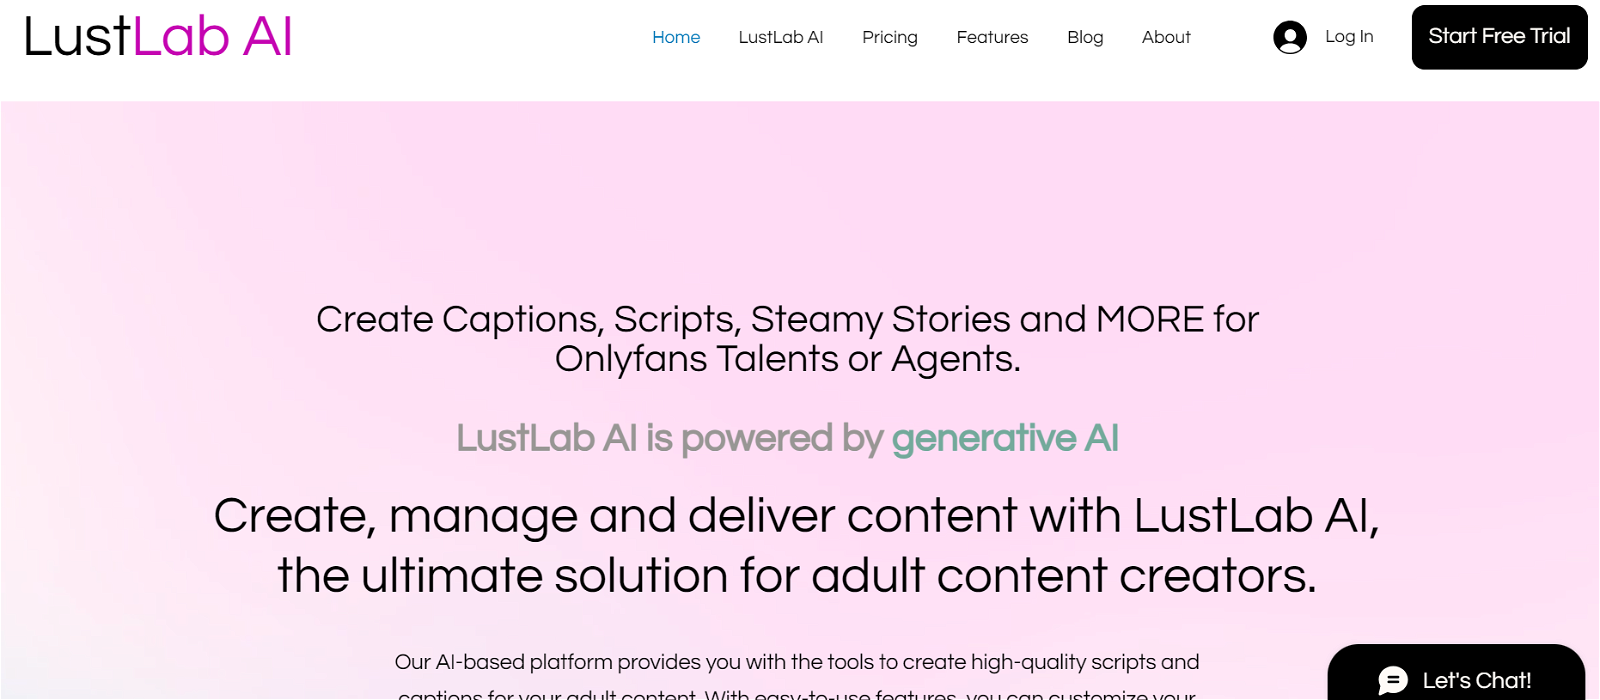 LustLab AI website